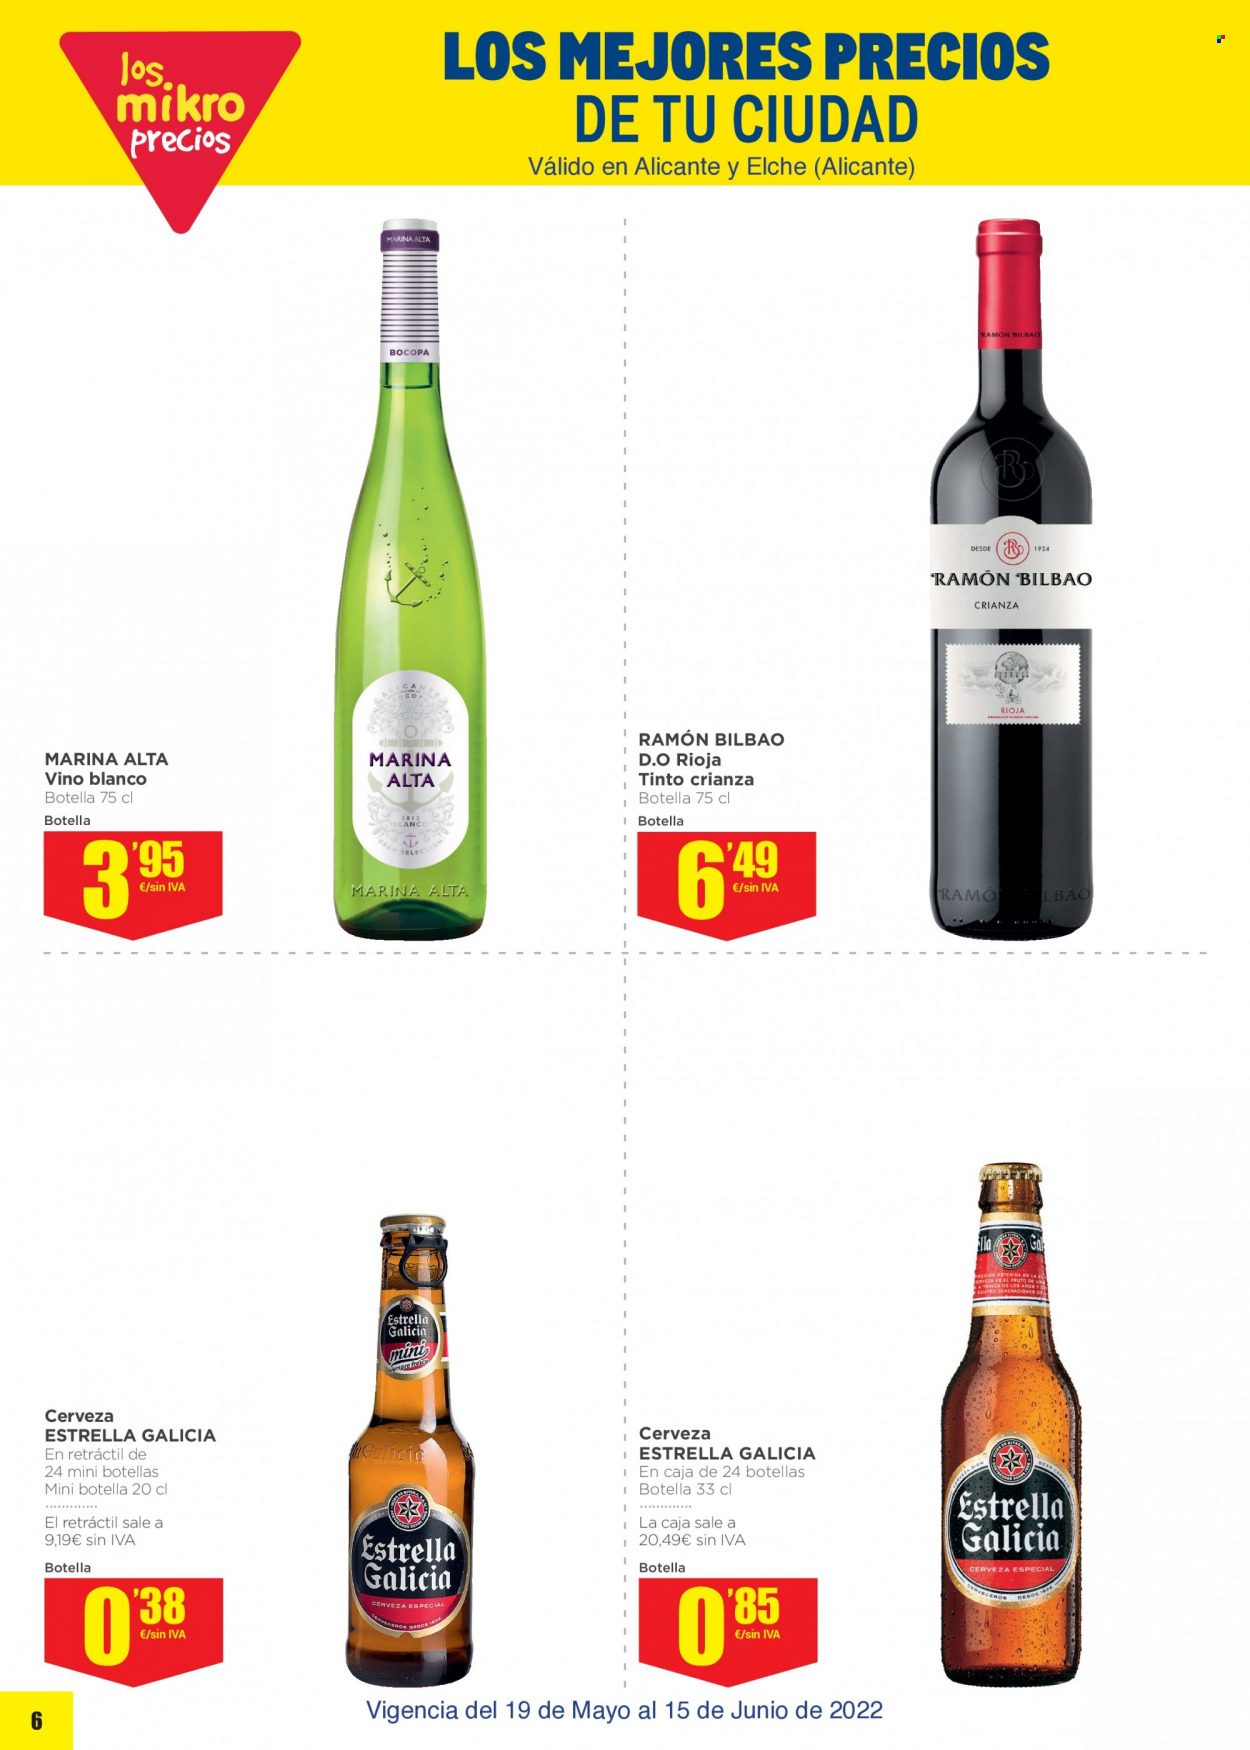 thumbnail - Folleto actual Makro - 19/05/22 - 15/06/22 - Ventas - Estrella Galicia, cerveza, LG, vino, vino blanco, Rioja, Crianza. Página 5.